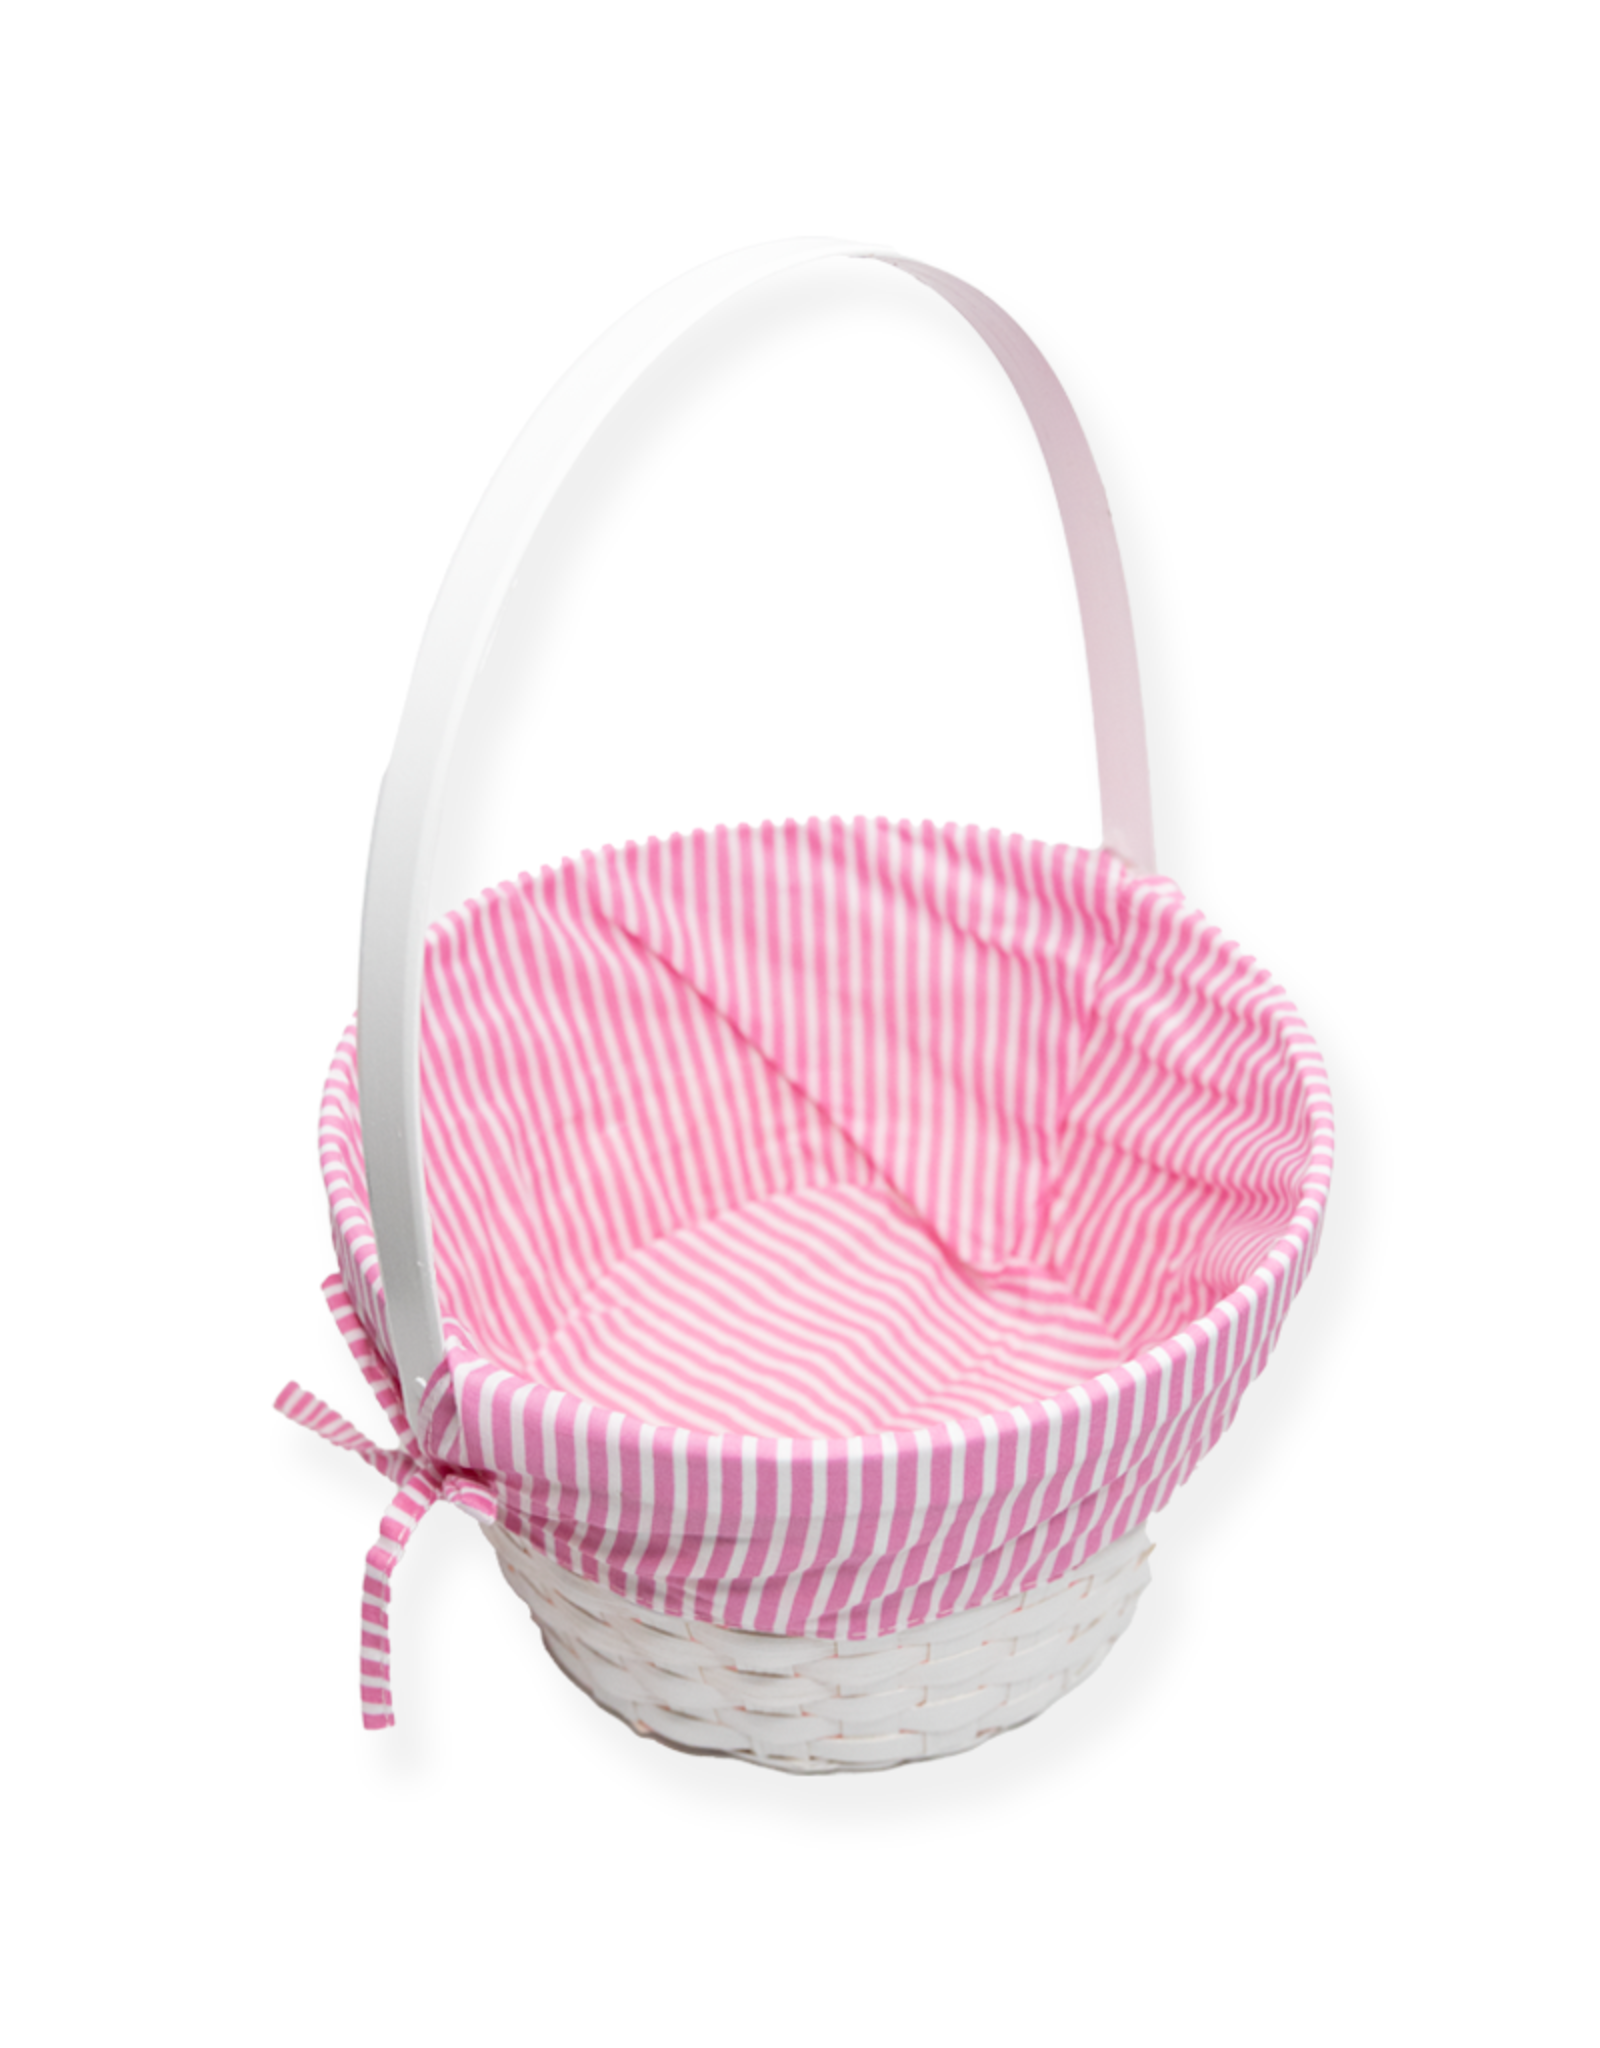 Burton & Burton Lined Easter Basket w/ Embroidery Hot Pink Stripe